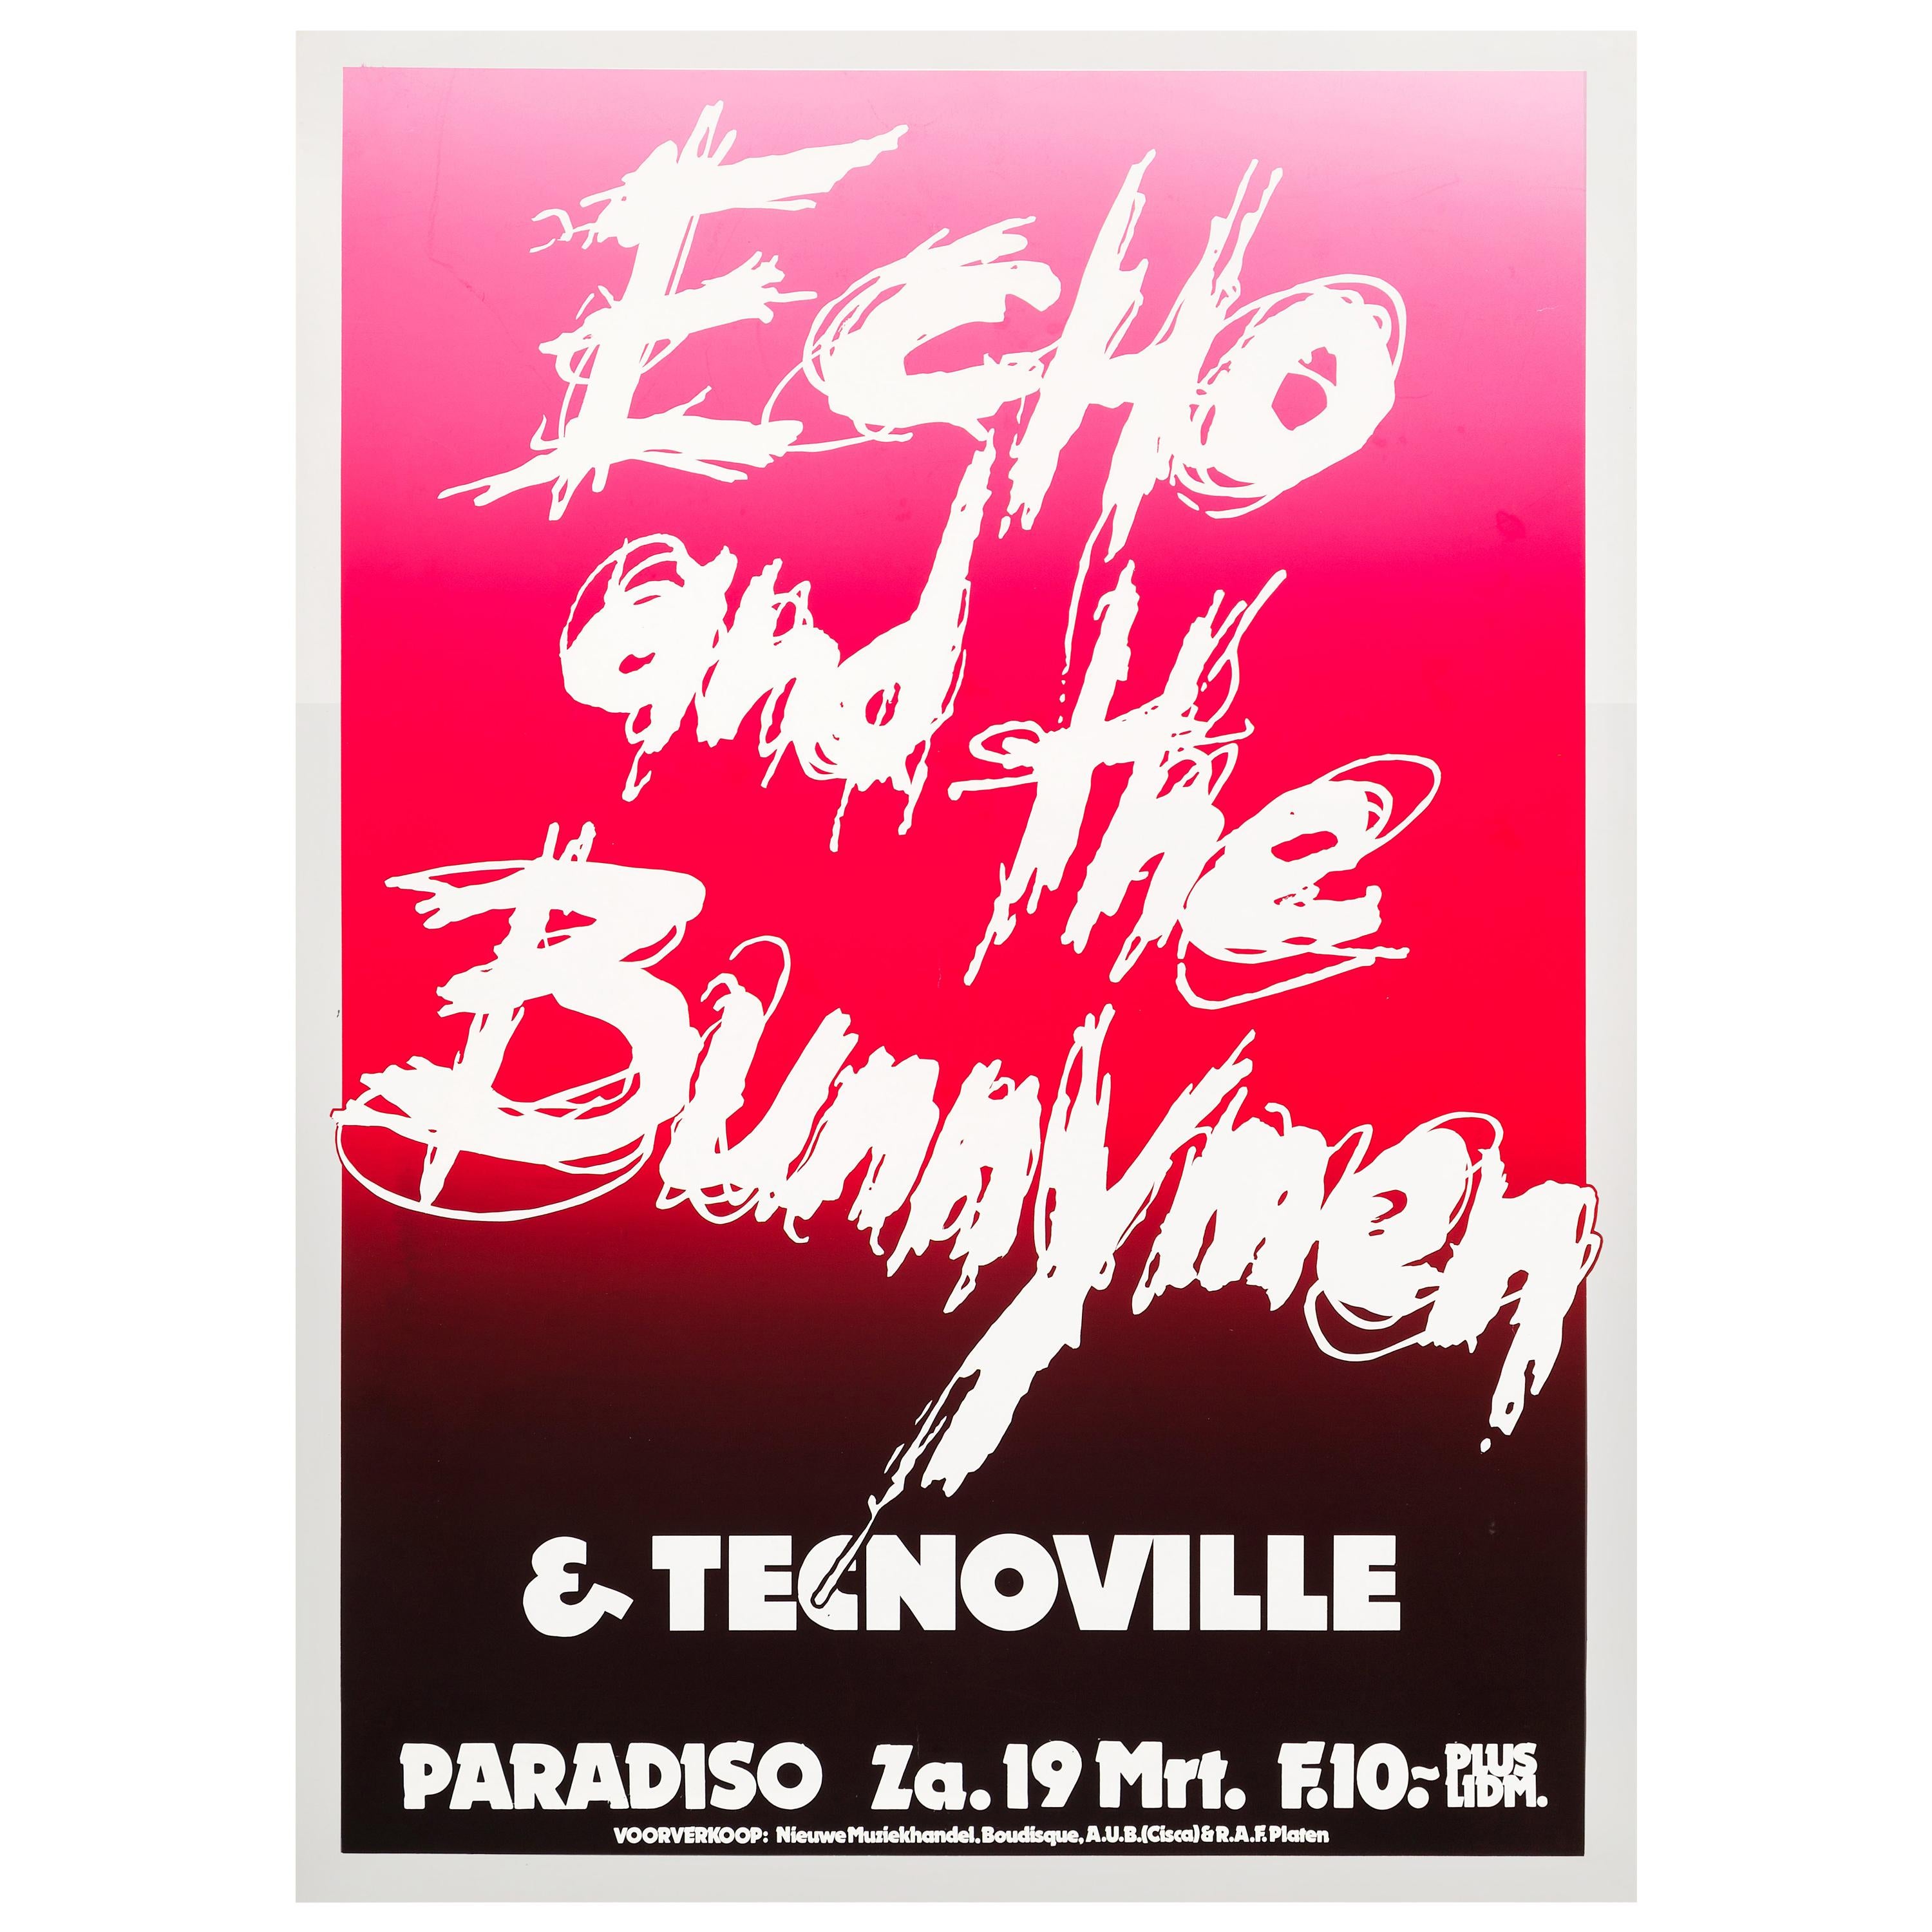 Echo & the Bunnymen Original Concert Poster for the Paradiso, Amsterdam, 1983